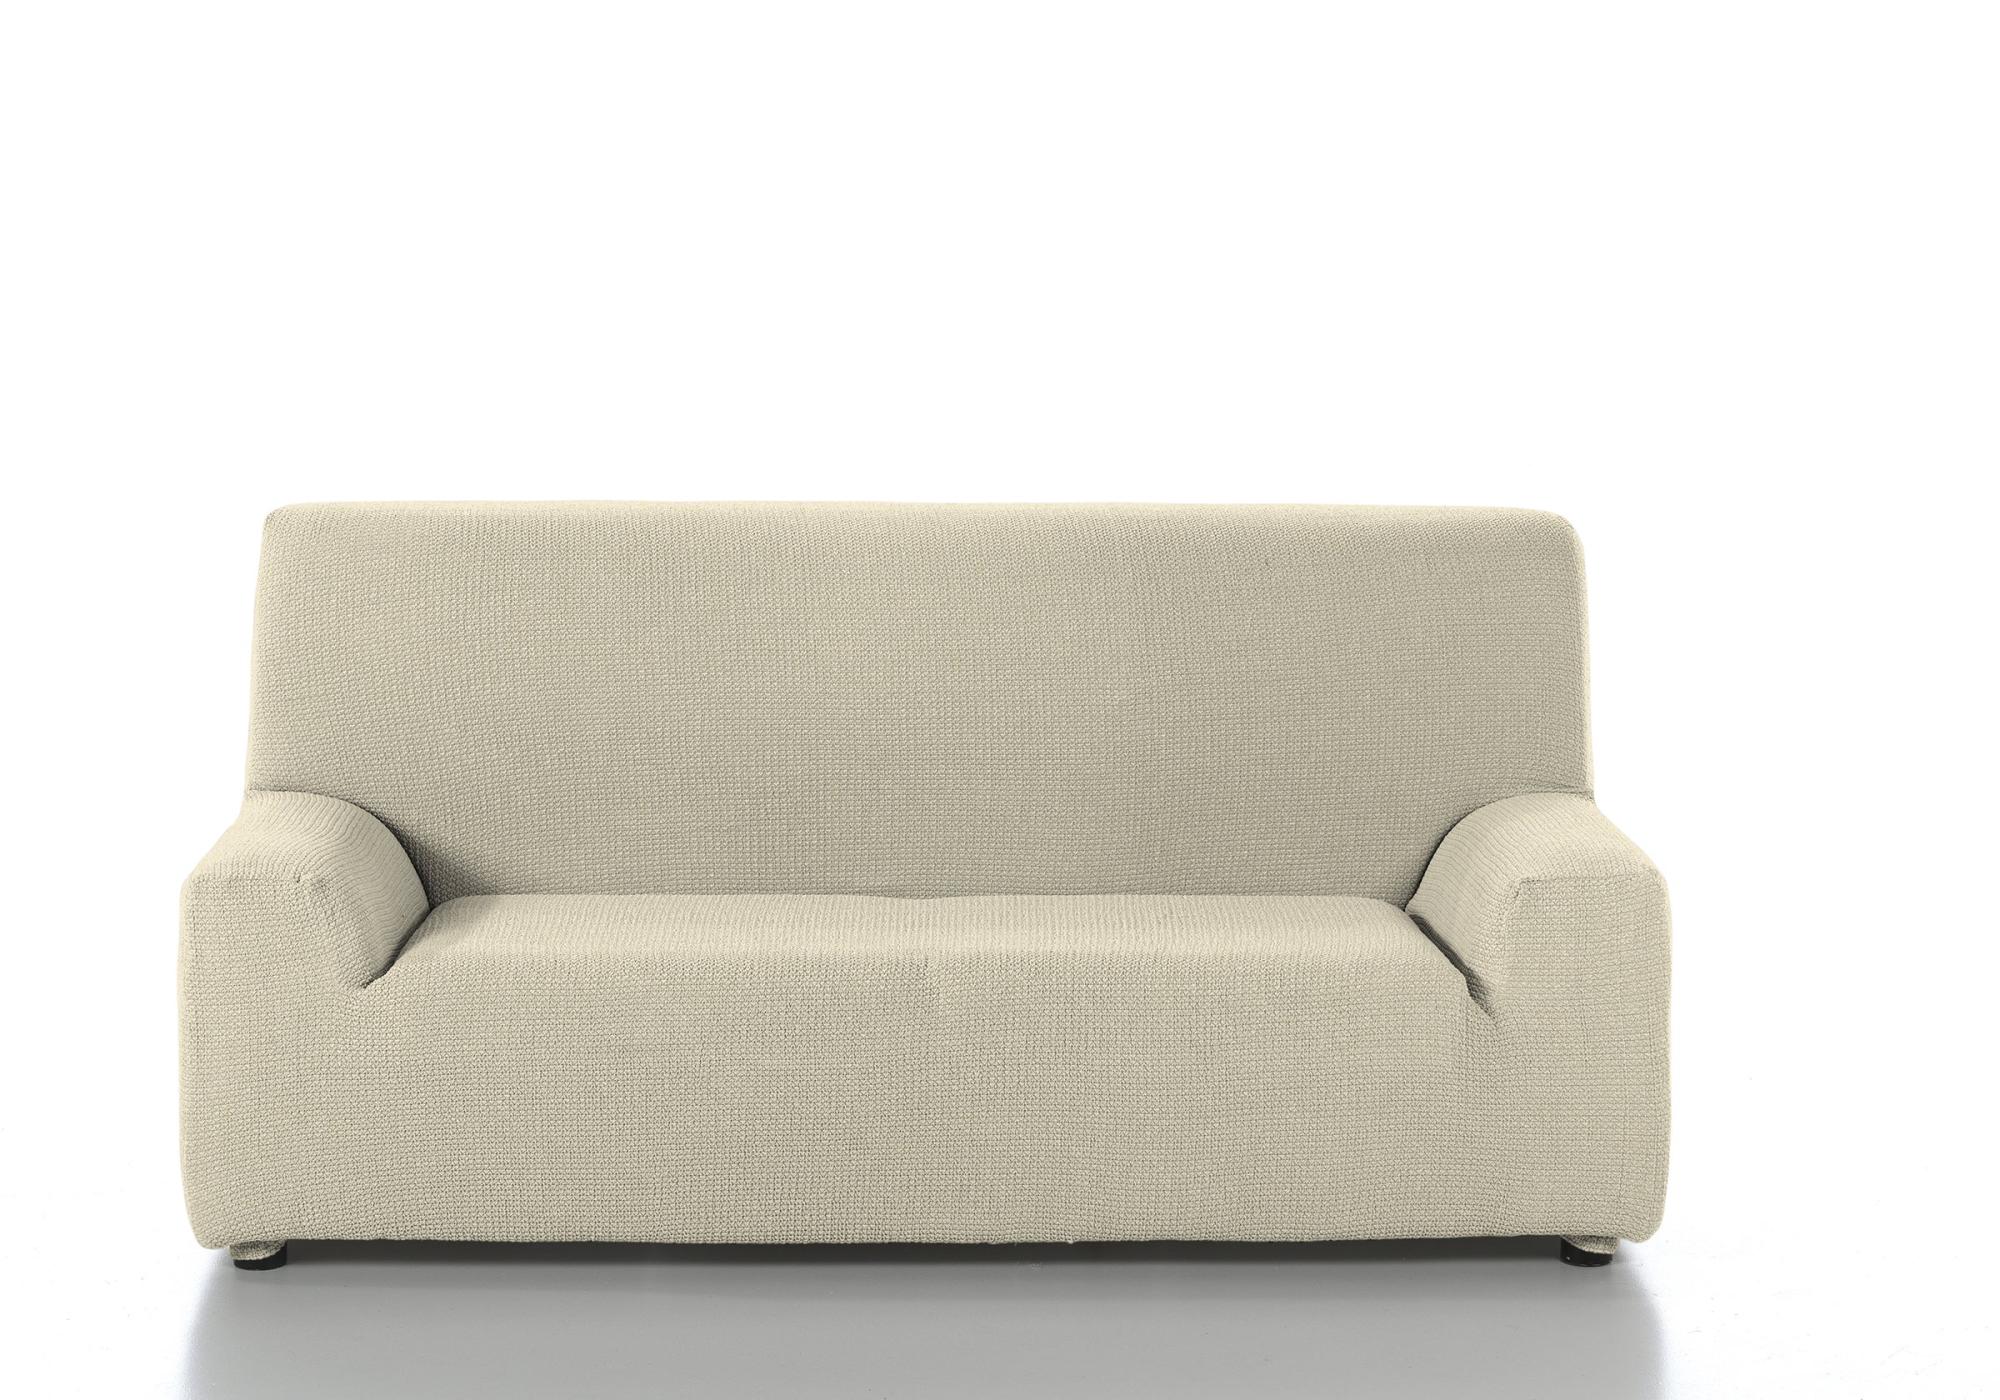 Funda sofá elástica Edir beig 3 plazas | Leroy Merlin